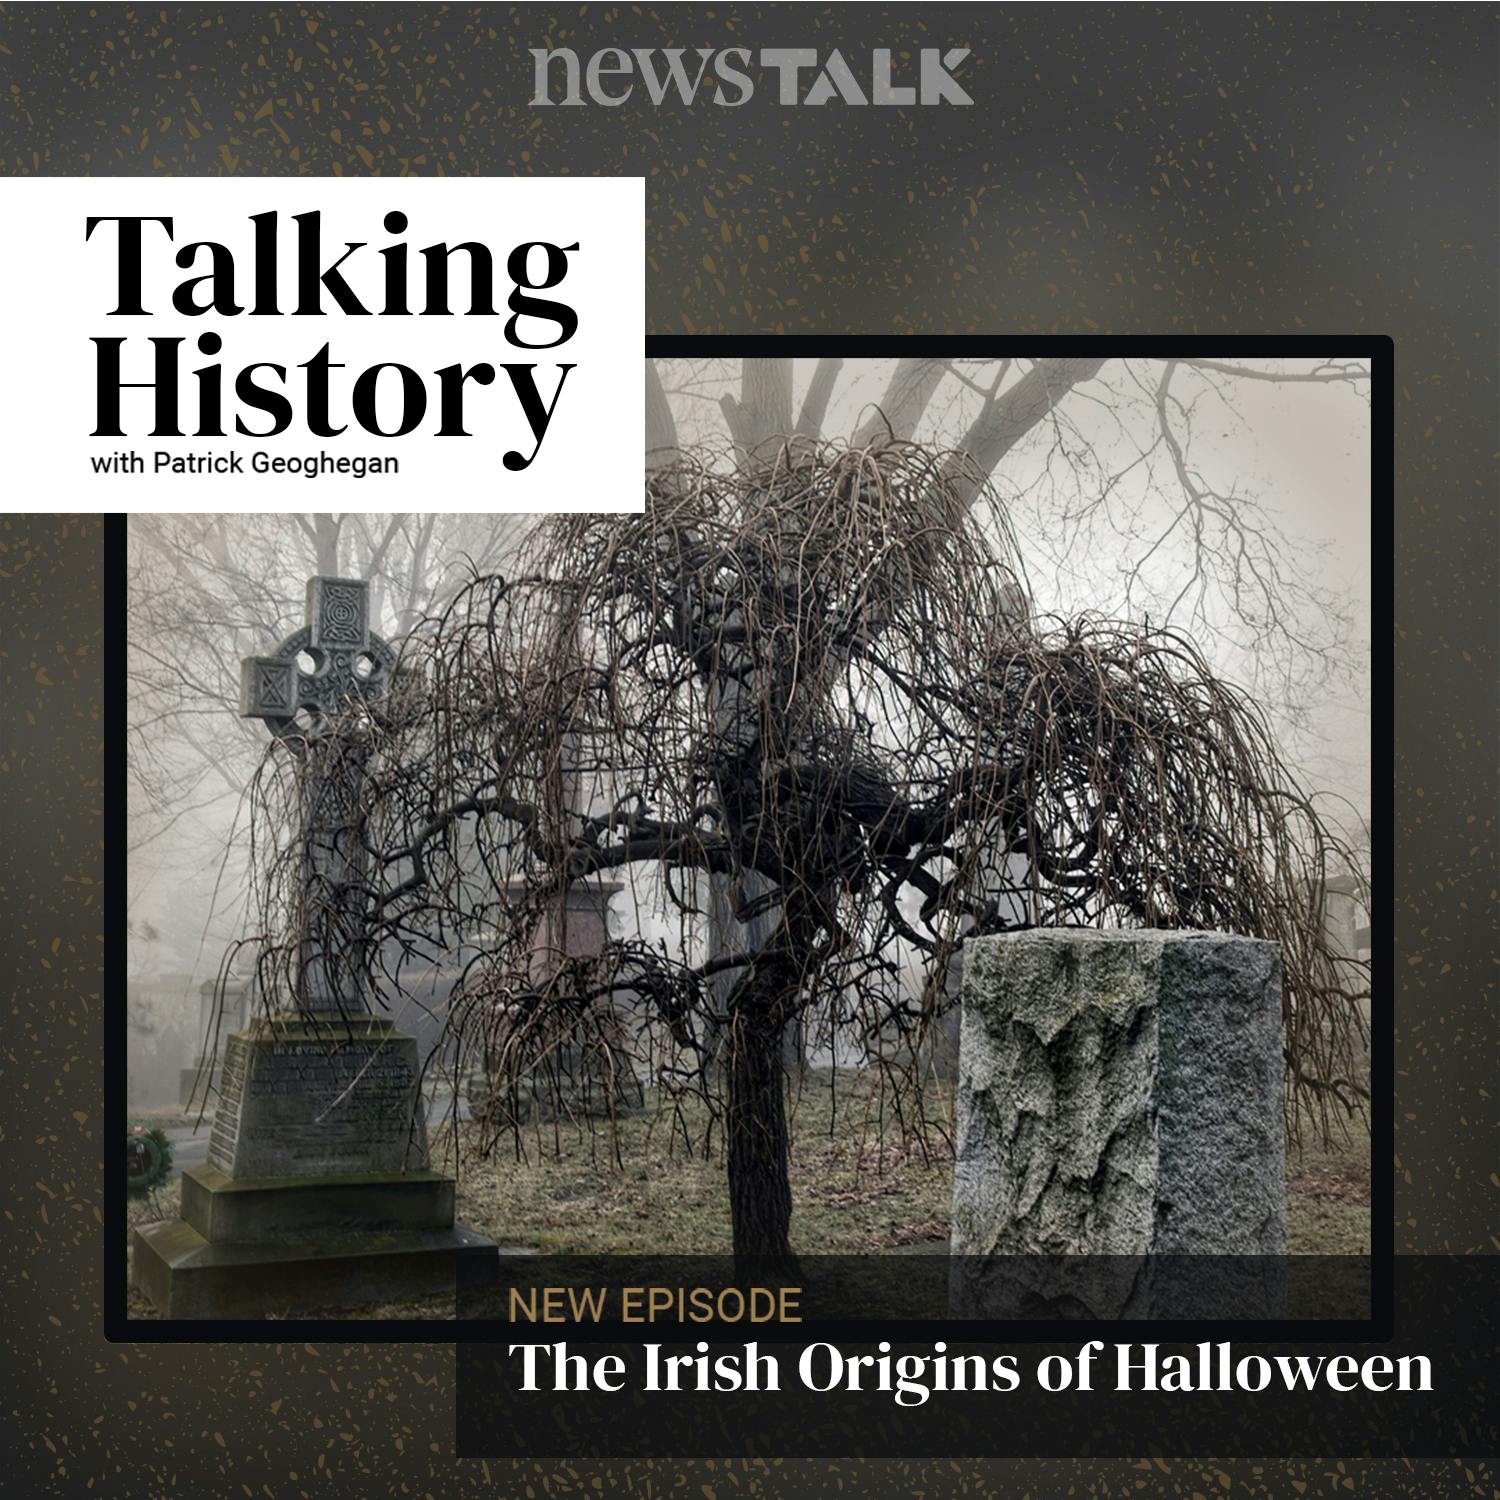 The Irish Origins of Halloween